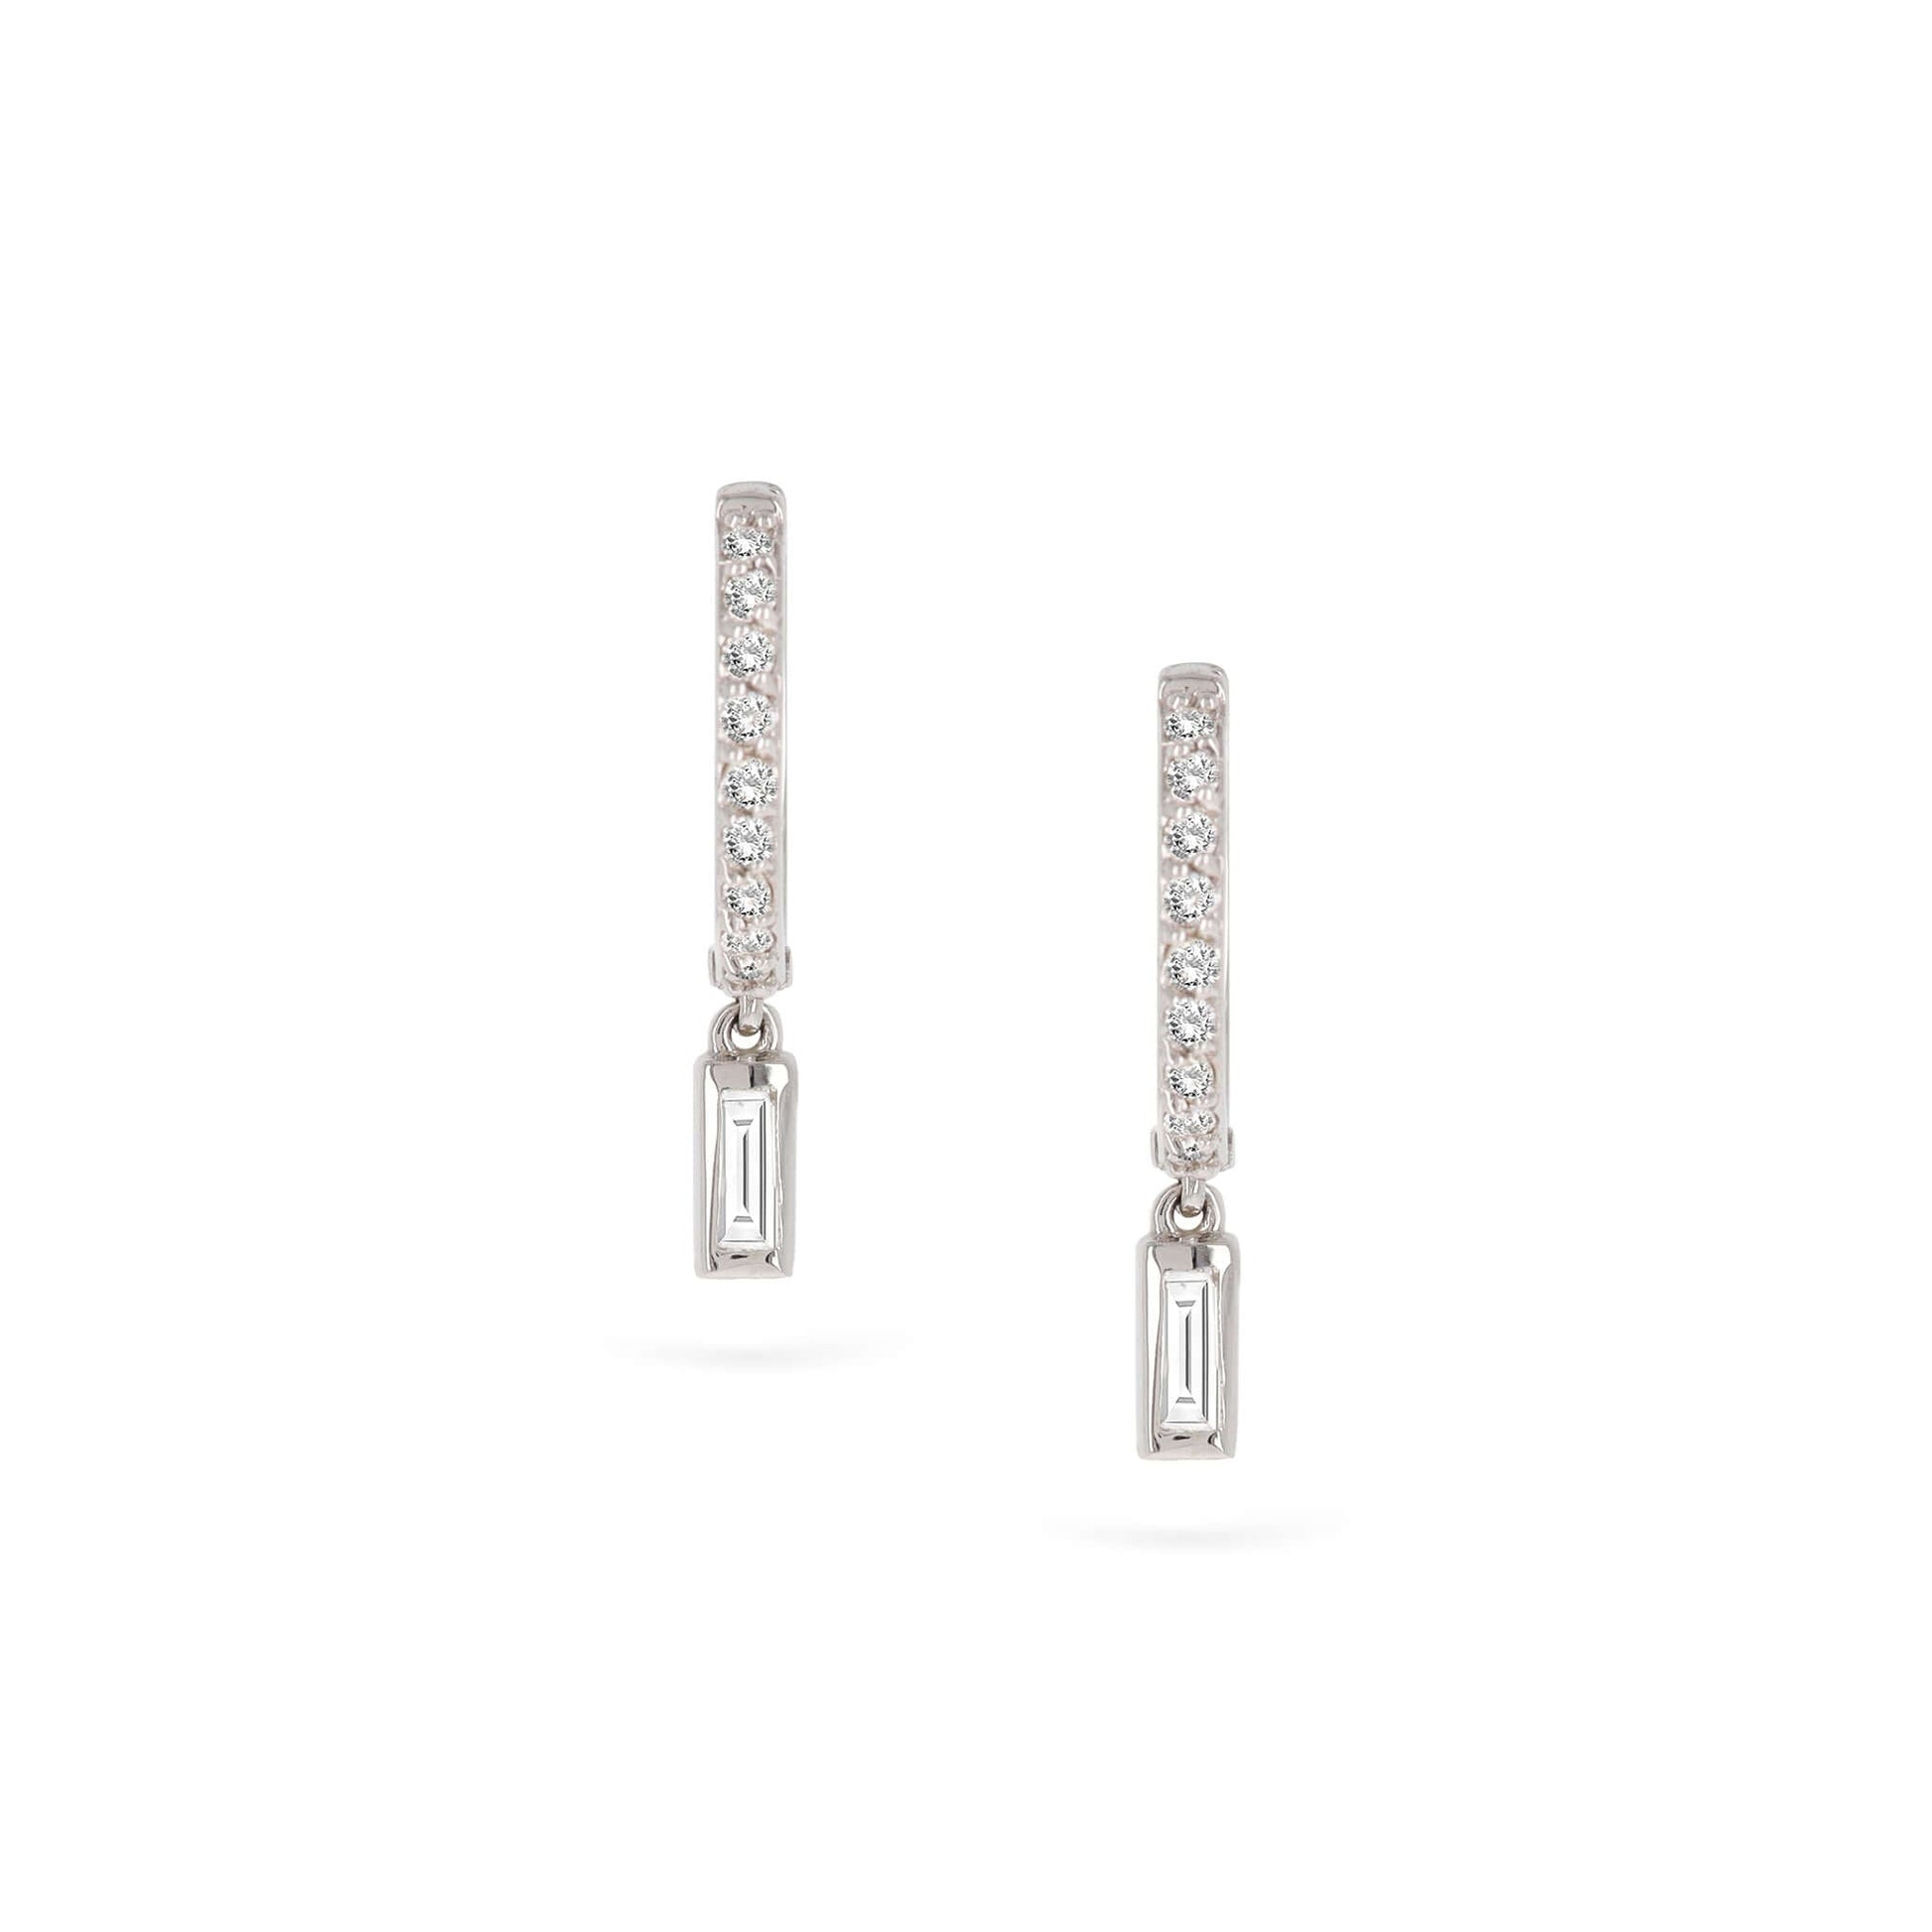 Lisa | Diamond Earrings | 0.3 Cts. | 14K Gold - earring Zengoda Shop online from Artisan Brands